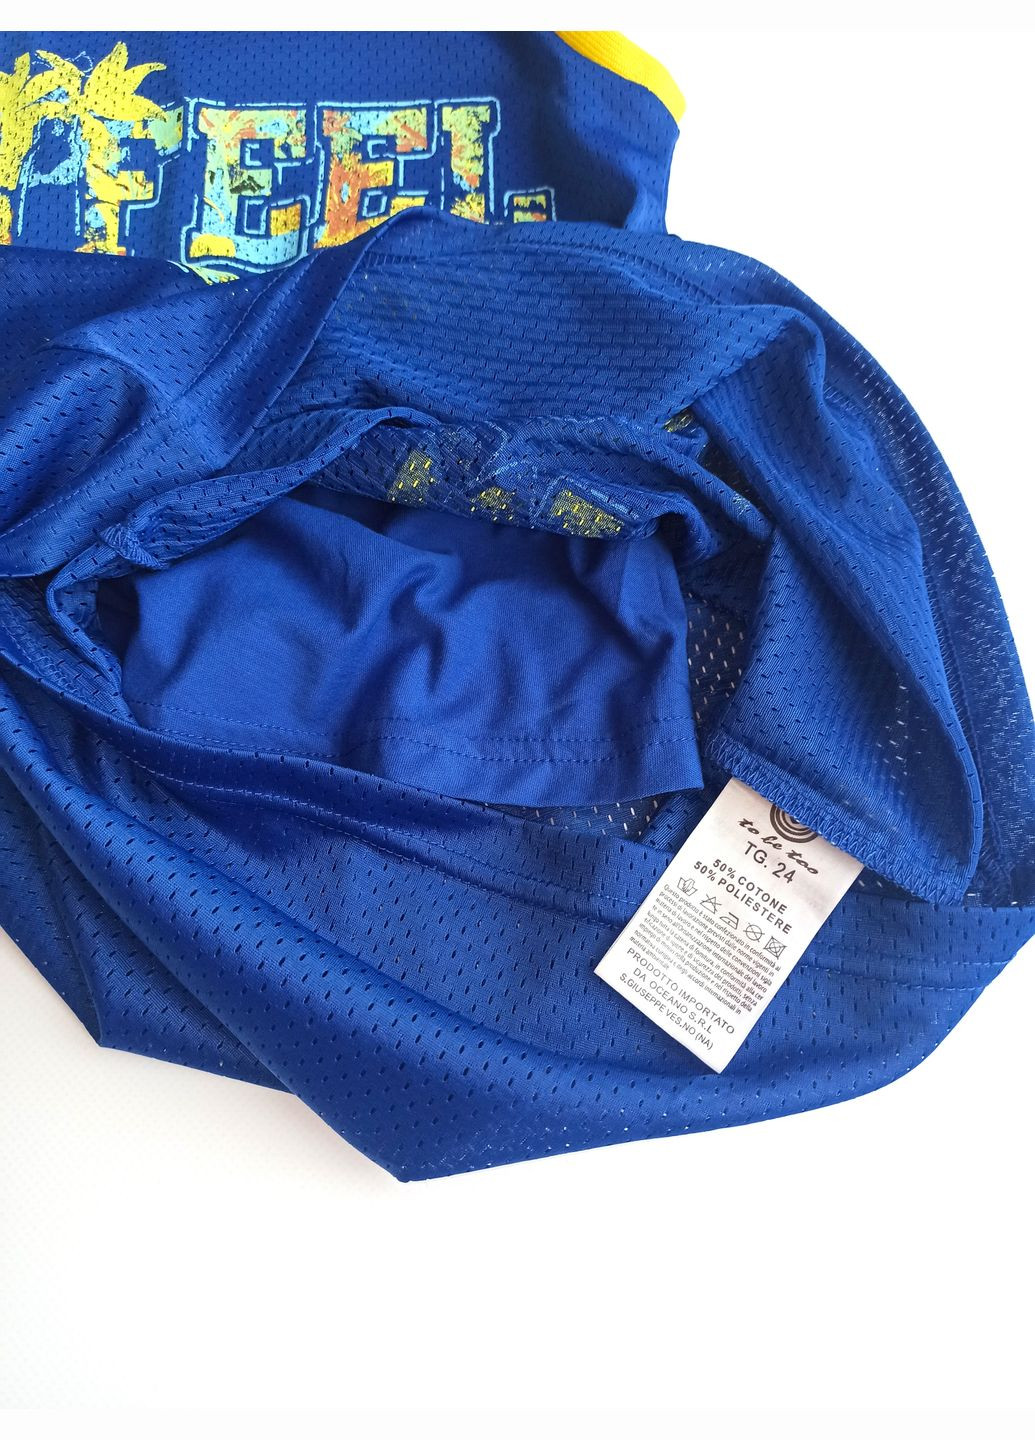 Сине-желтая летняя футболка-туника для девочки tf10184 сине-желтая To Be Too